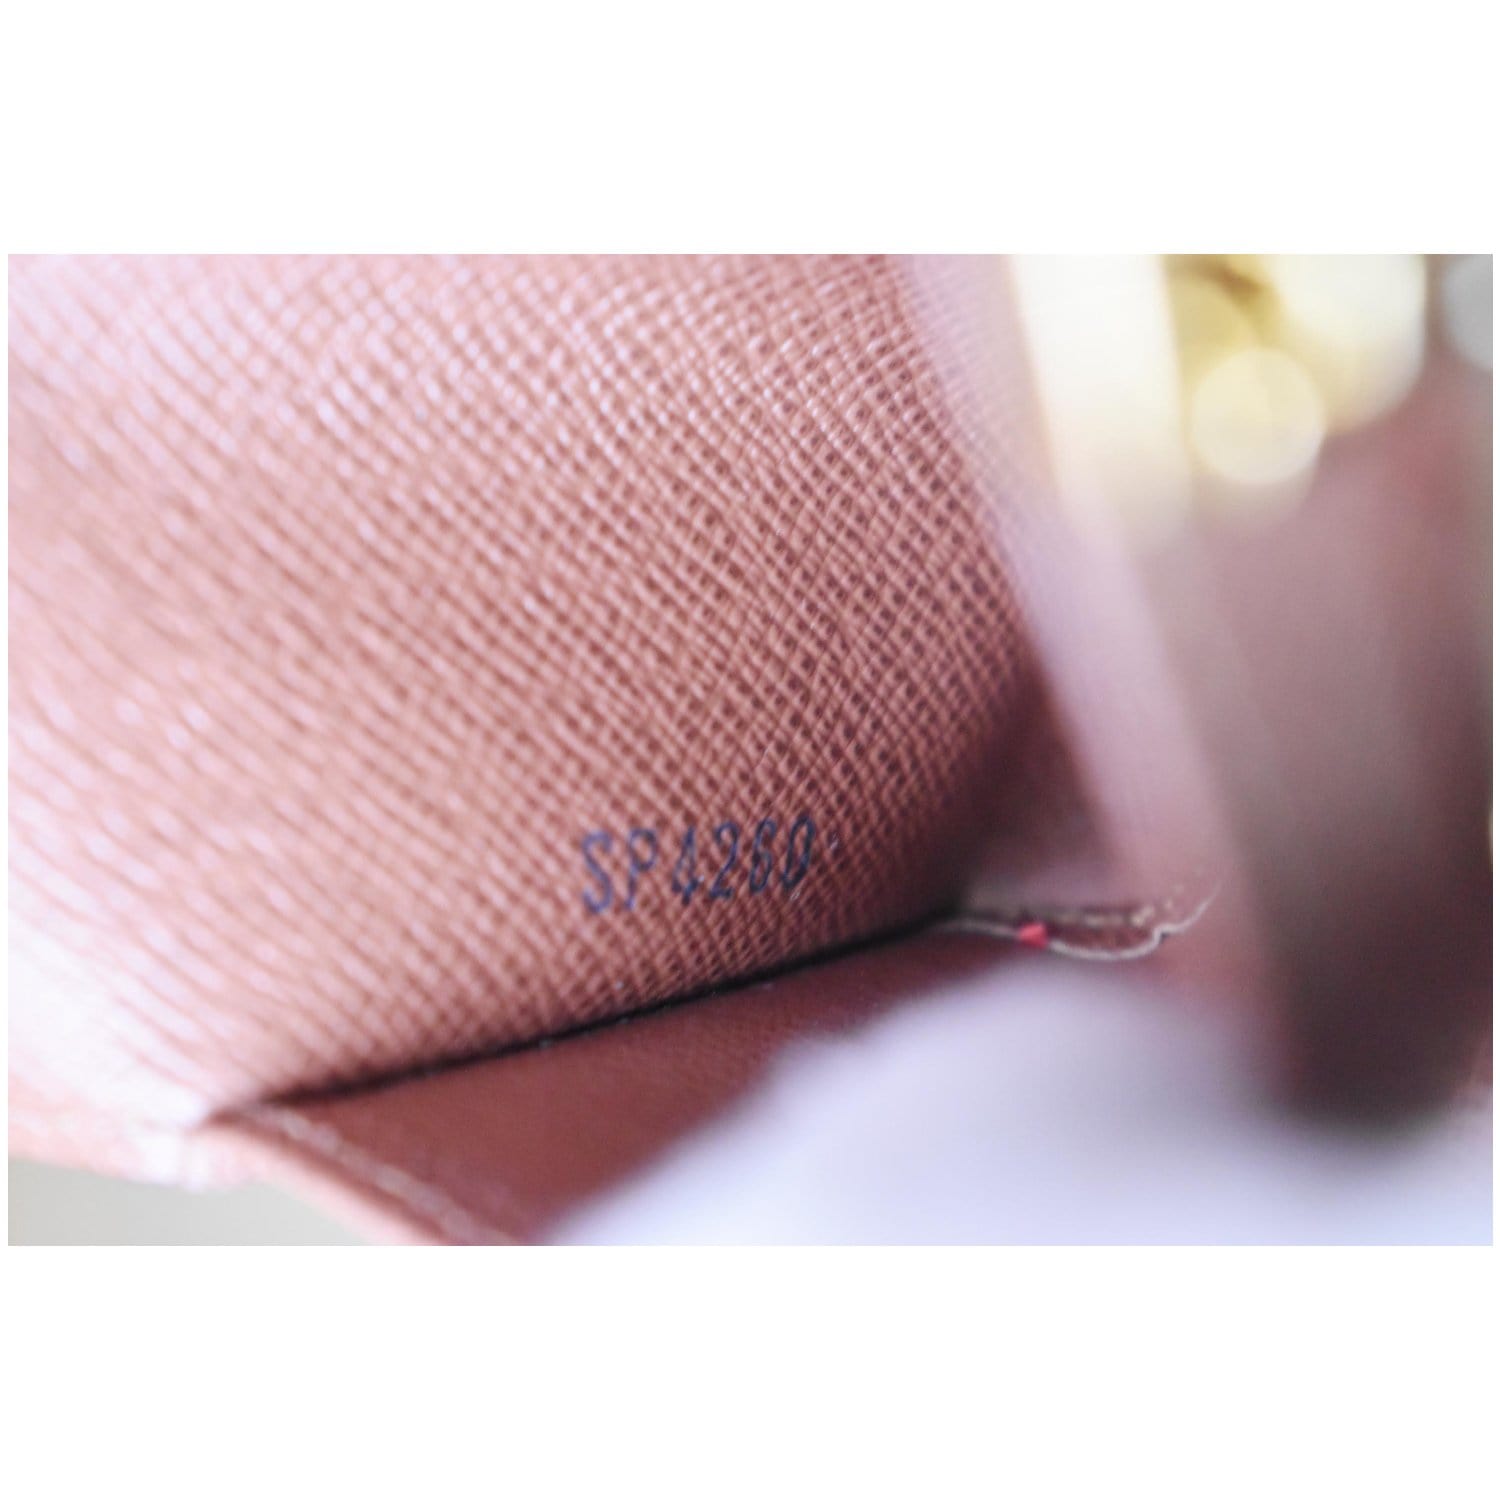 Louis Vuitton Golf Towel Holder Signature Leather Signature Stud Detail